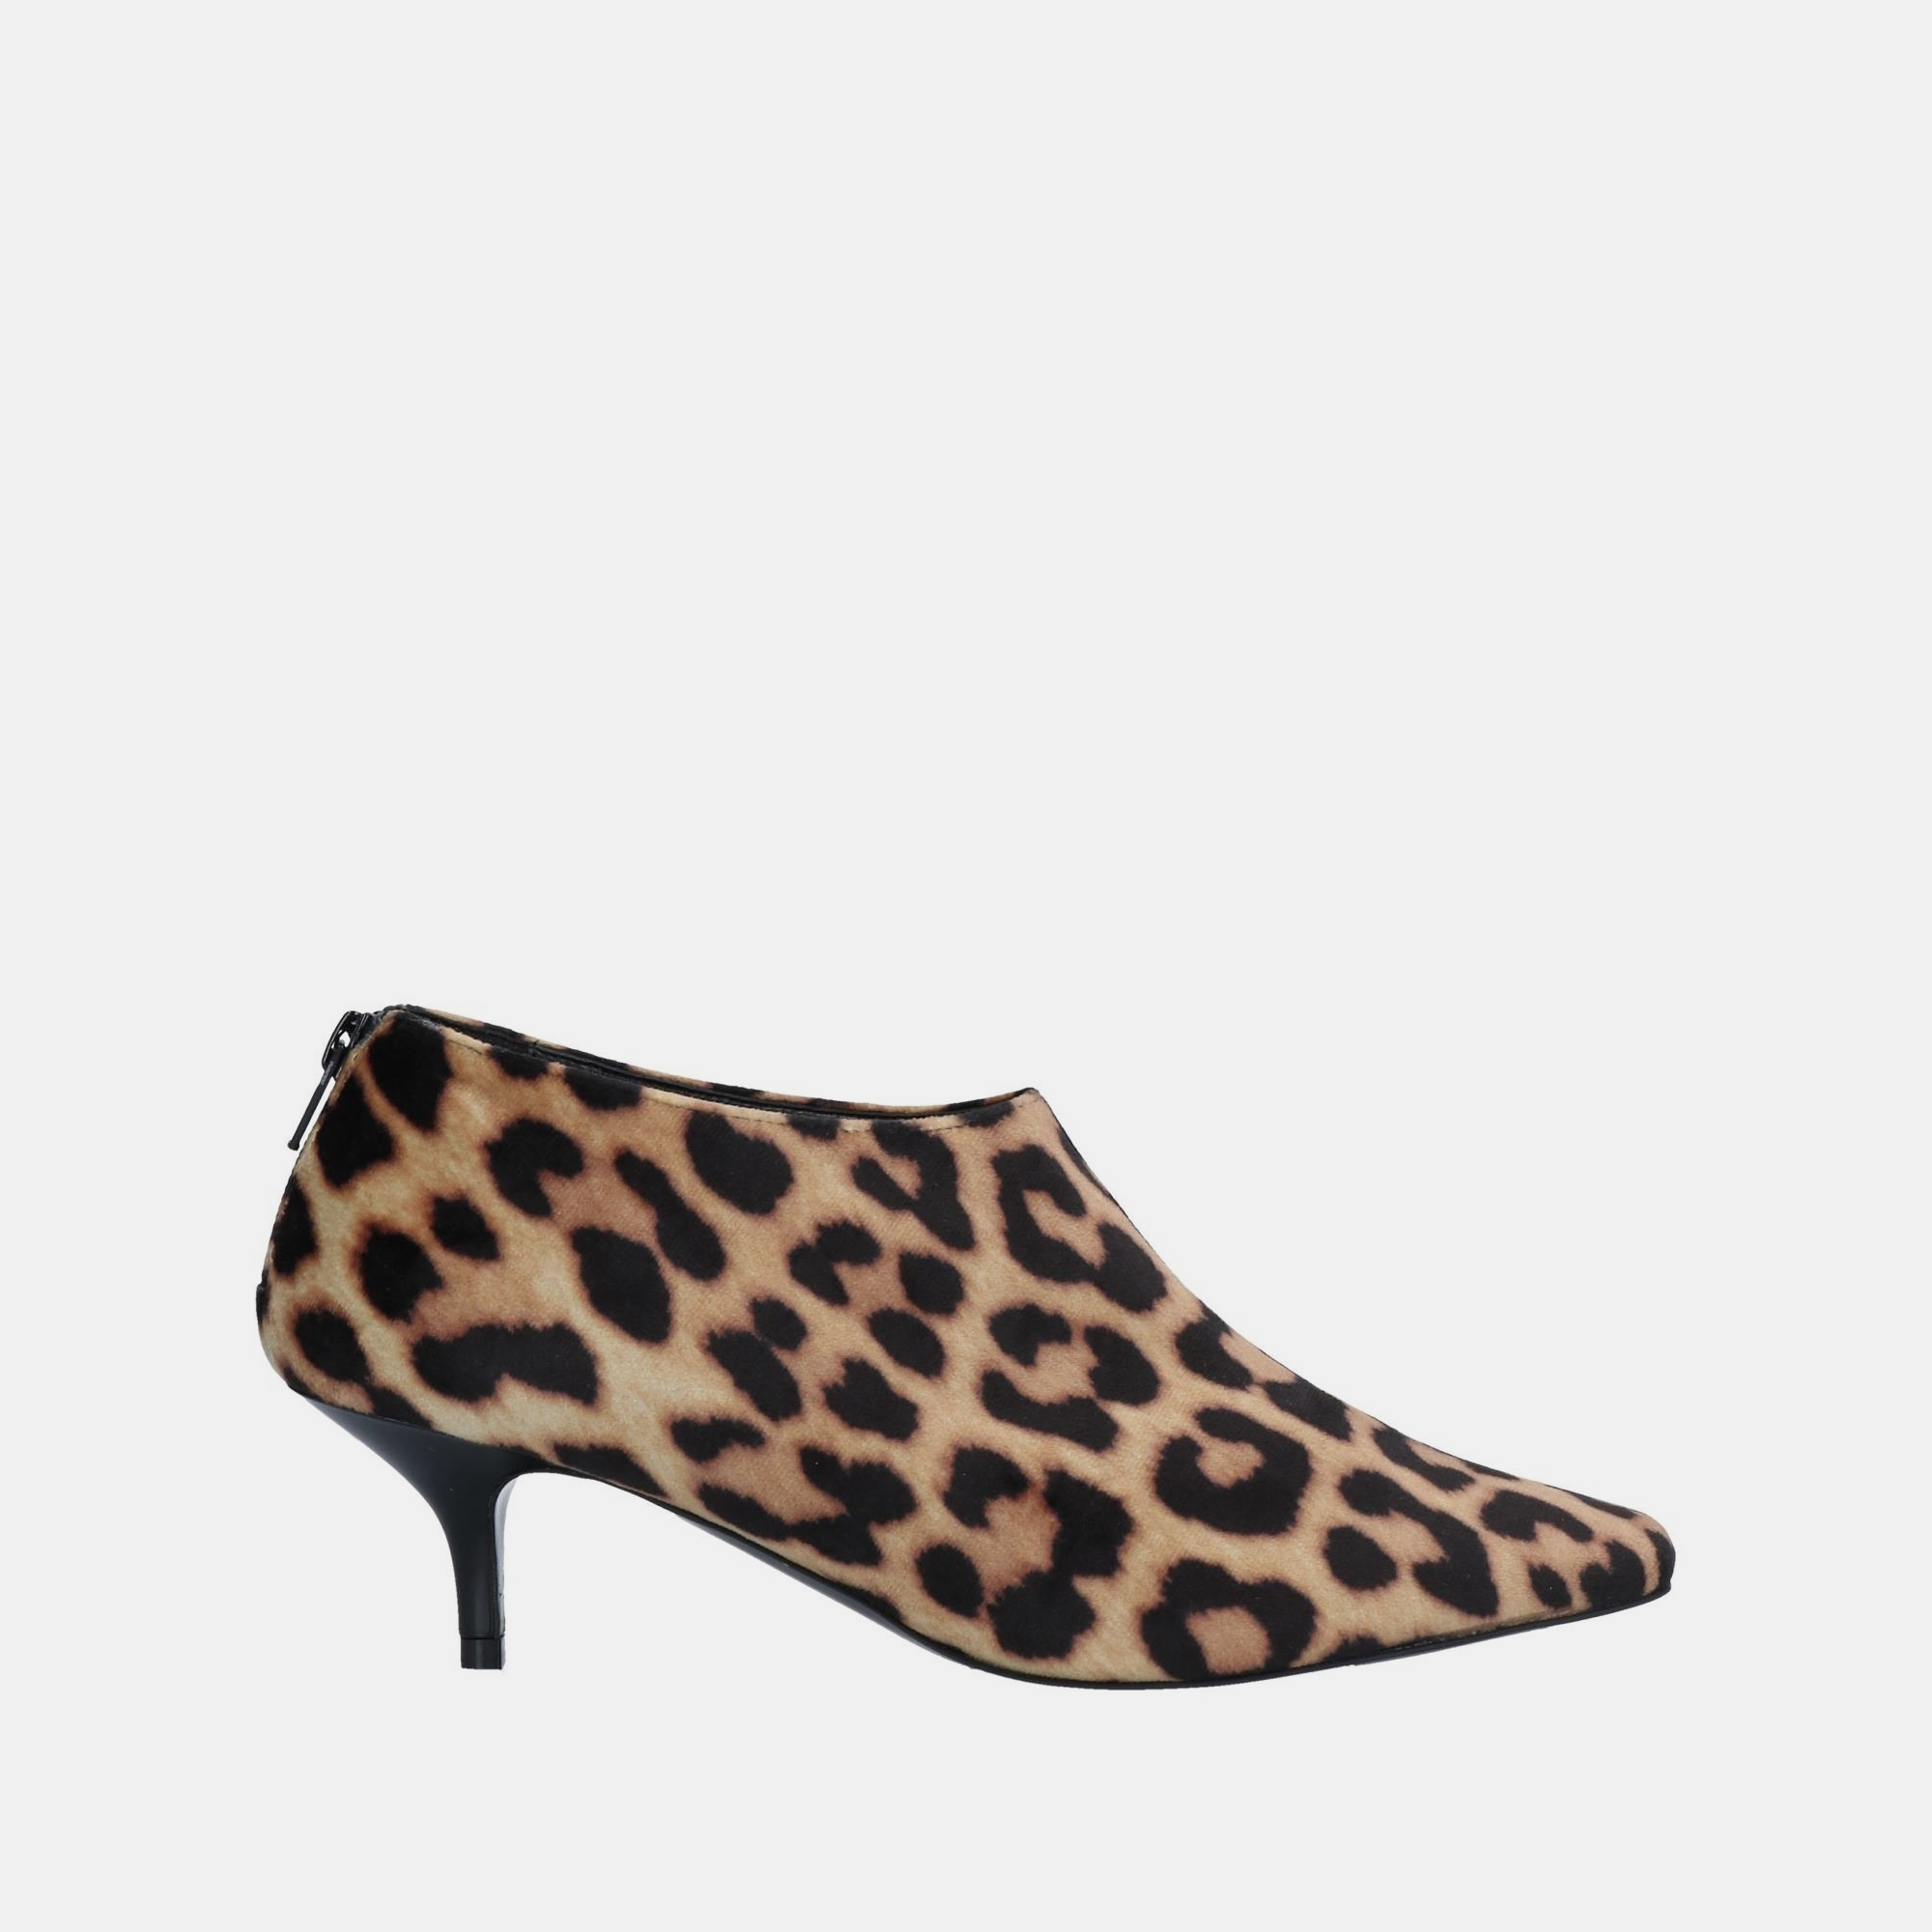 Stella mccartney  leopard print velvet ankle boots size 38.5